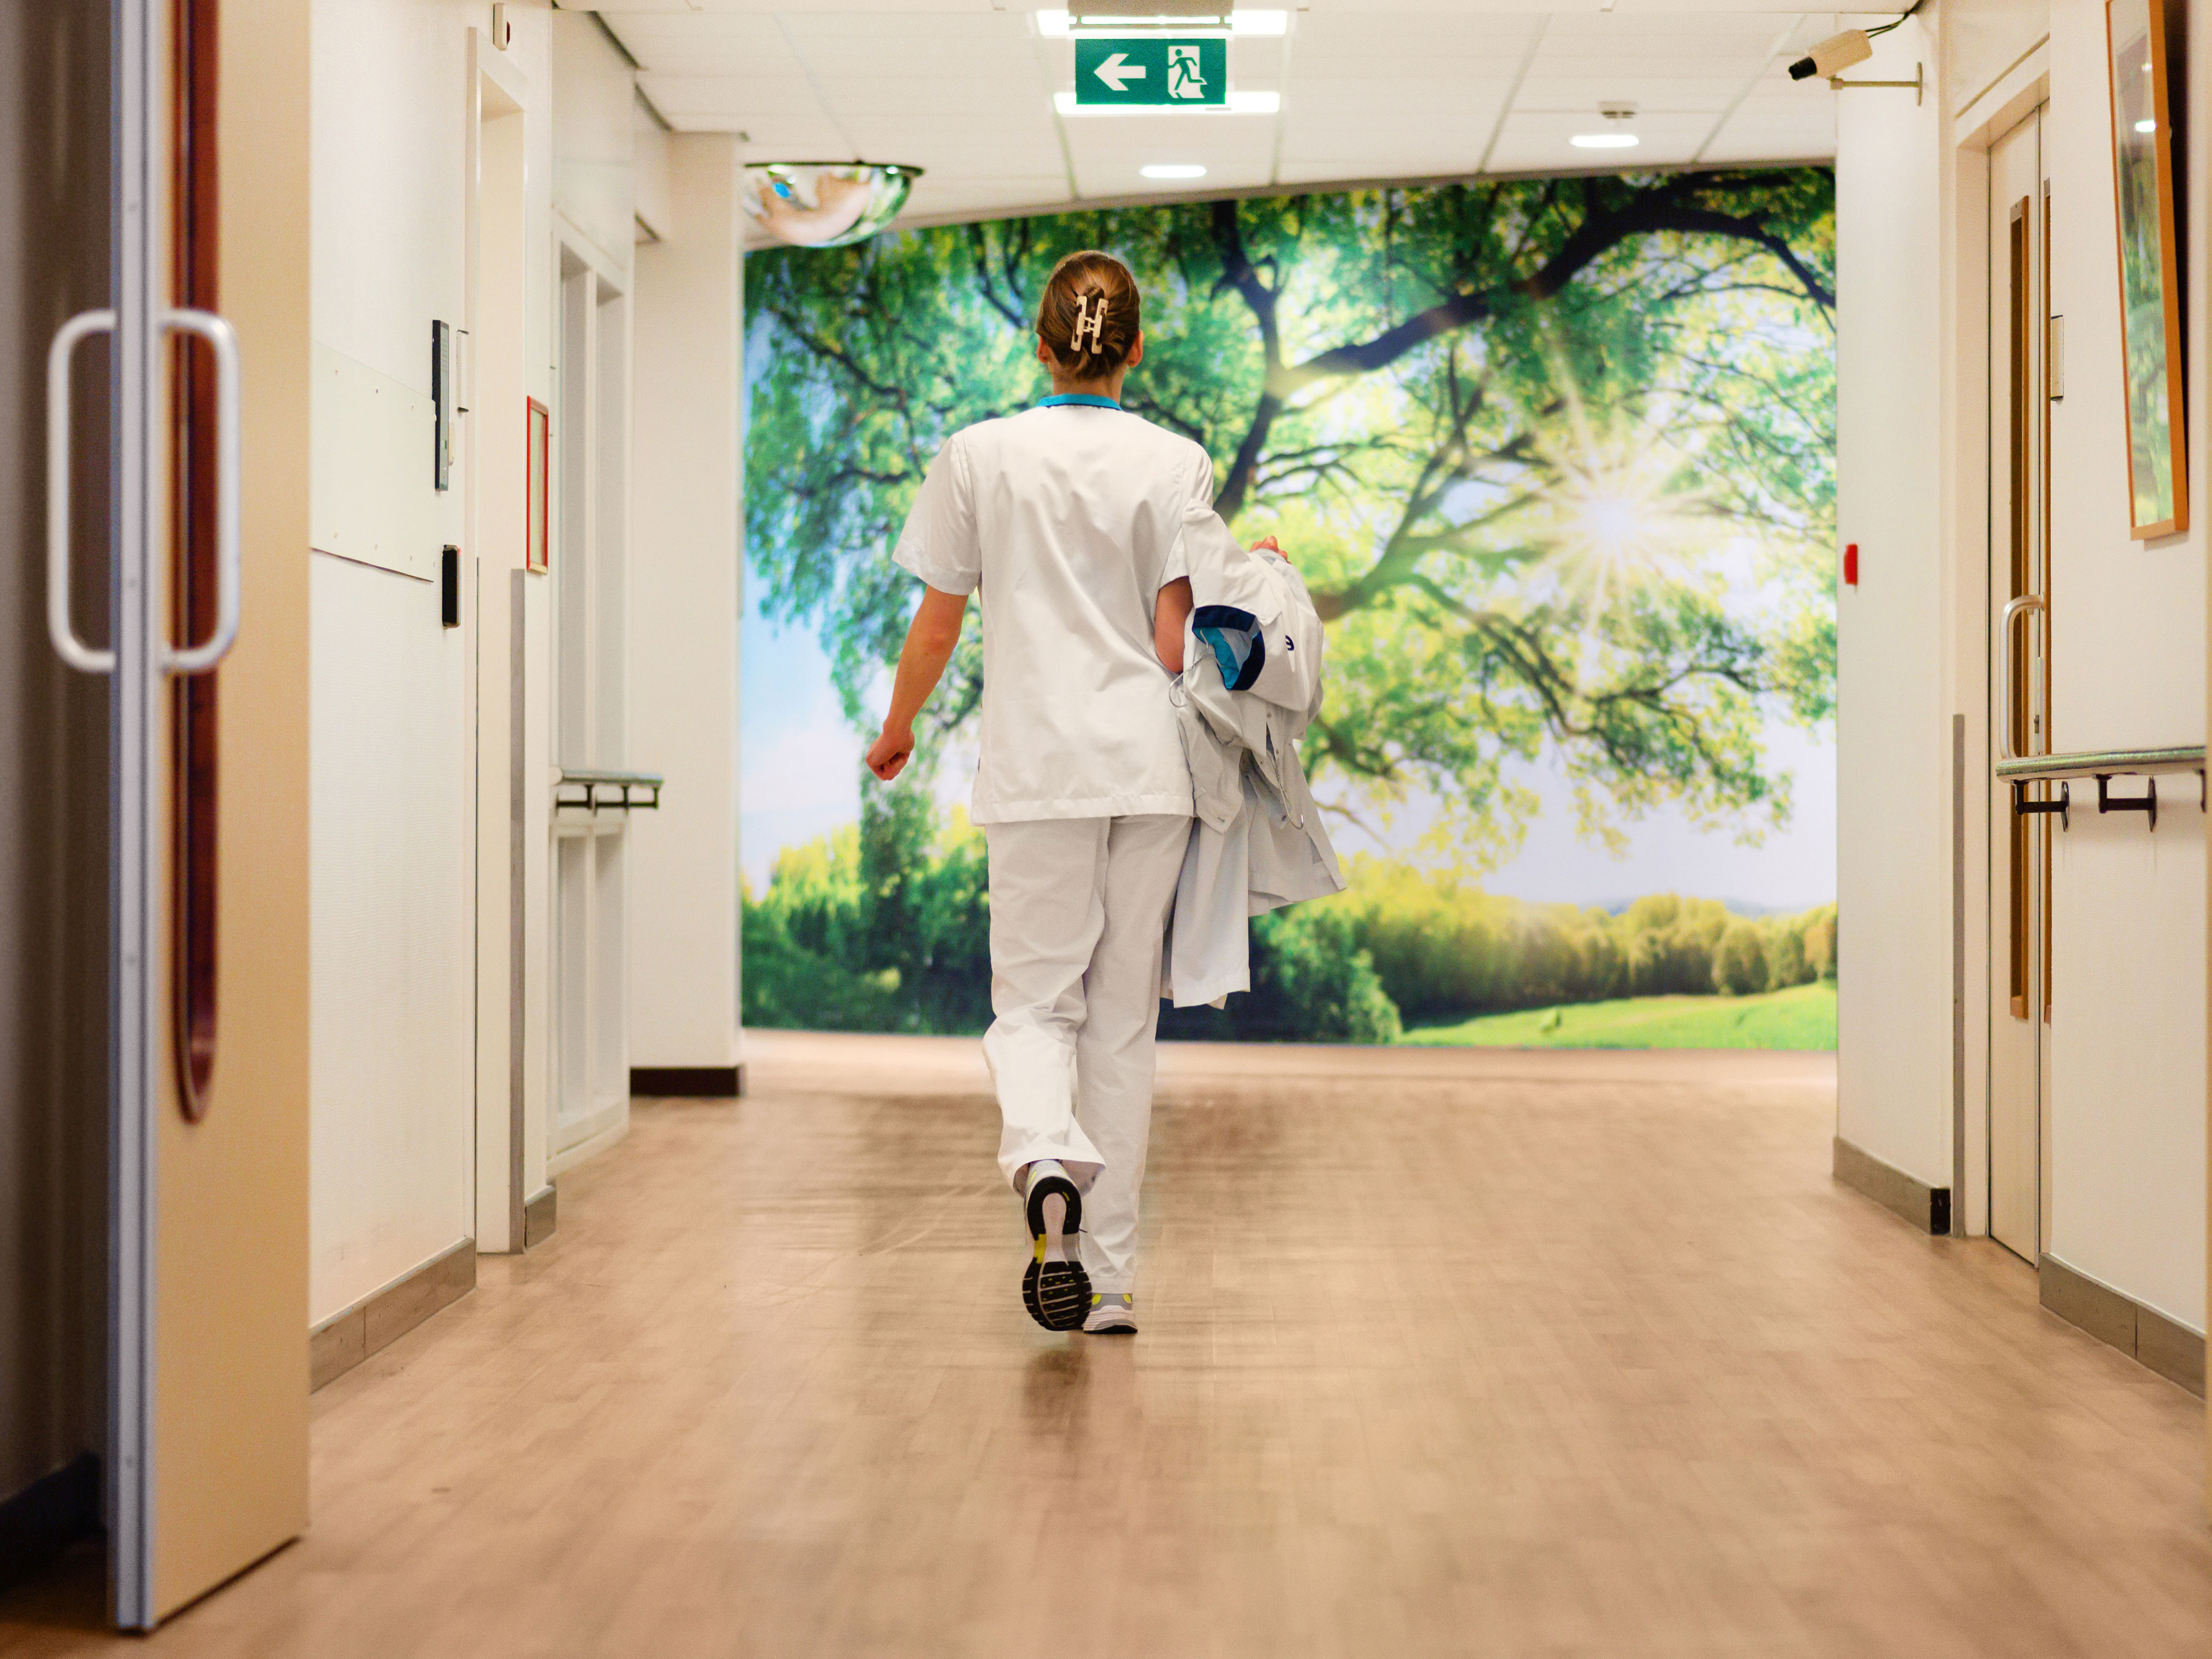 Photograph of a nurse walking down a hospital corridor